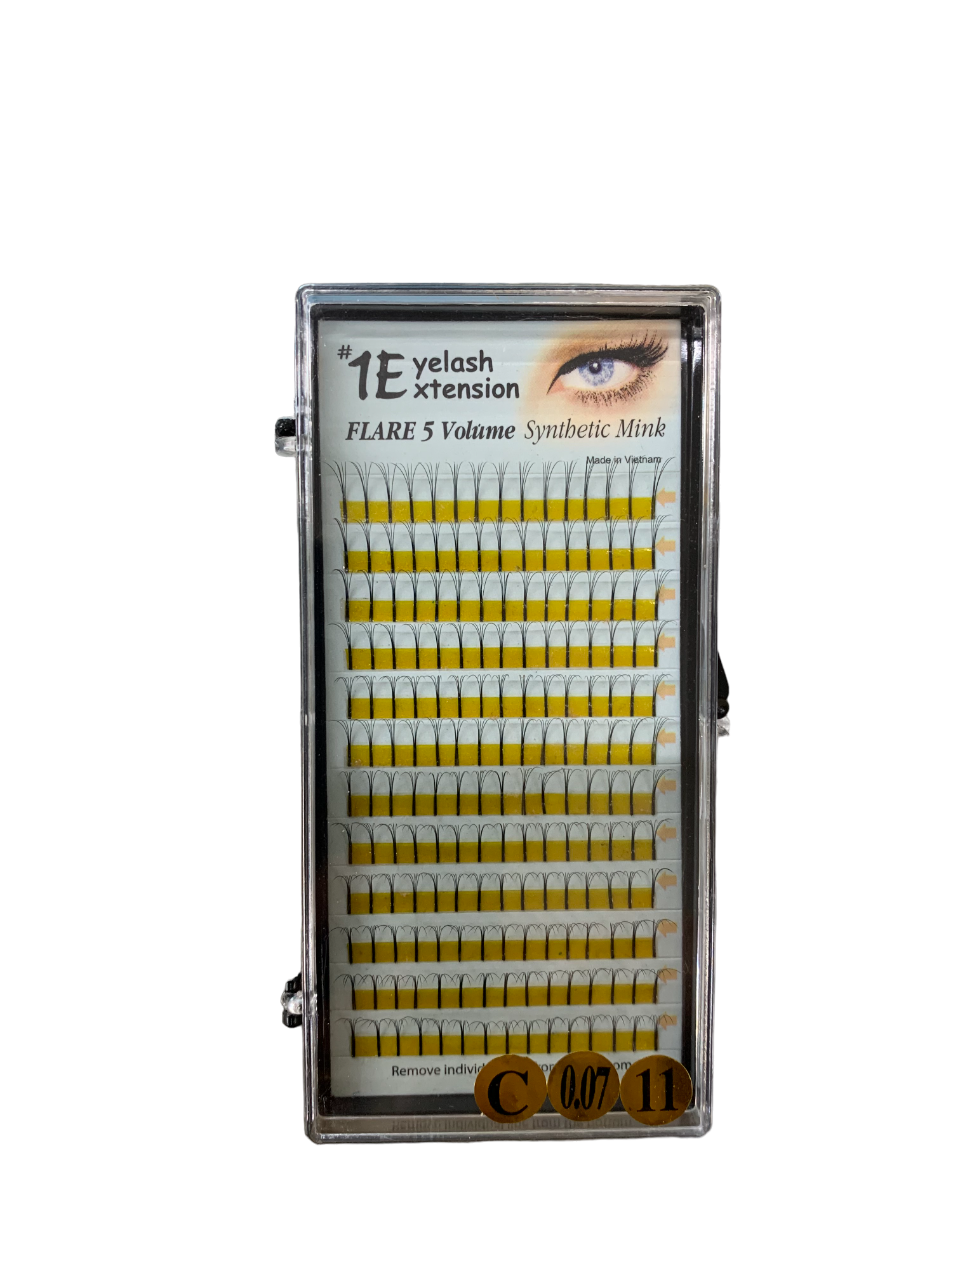 1E Eyelash Extension Flare 5 Volume Synthetic Mink C-0.07-11